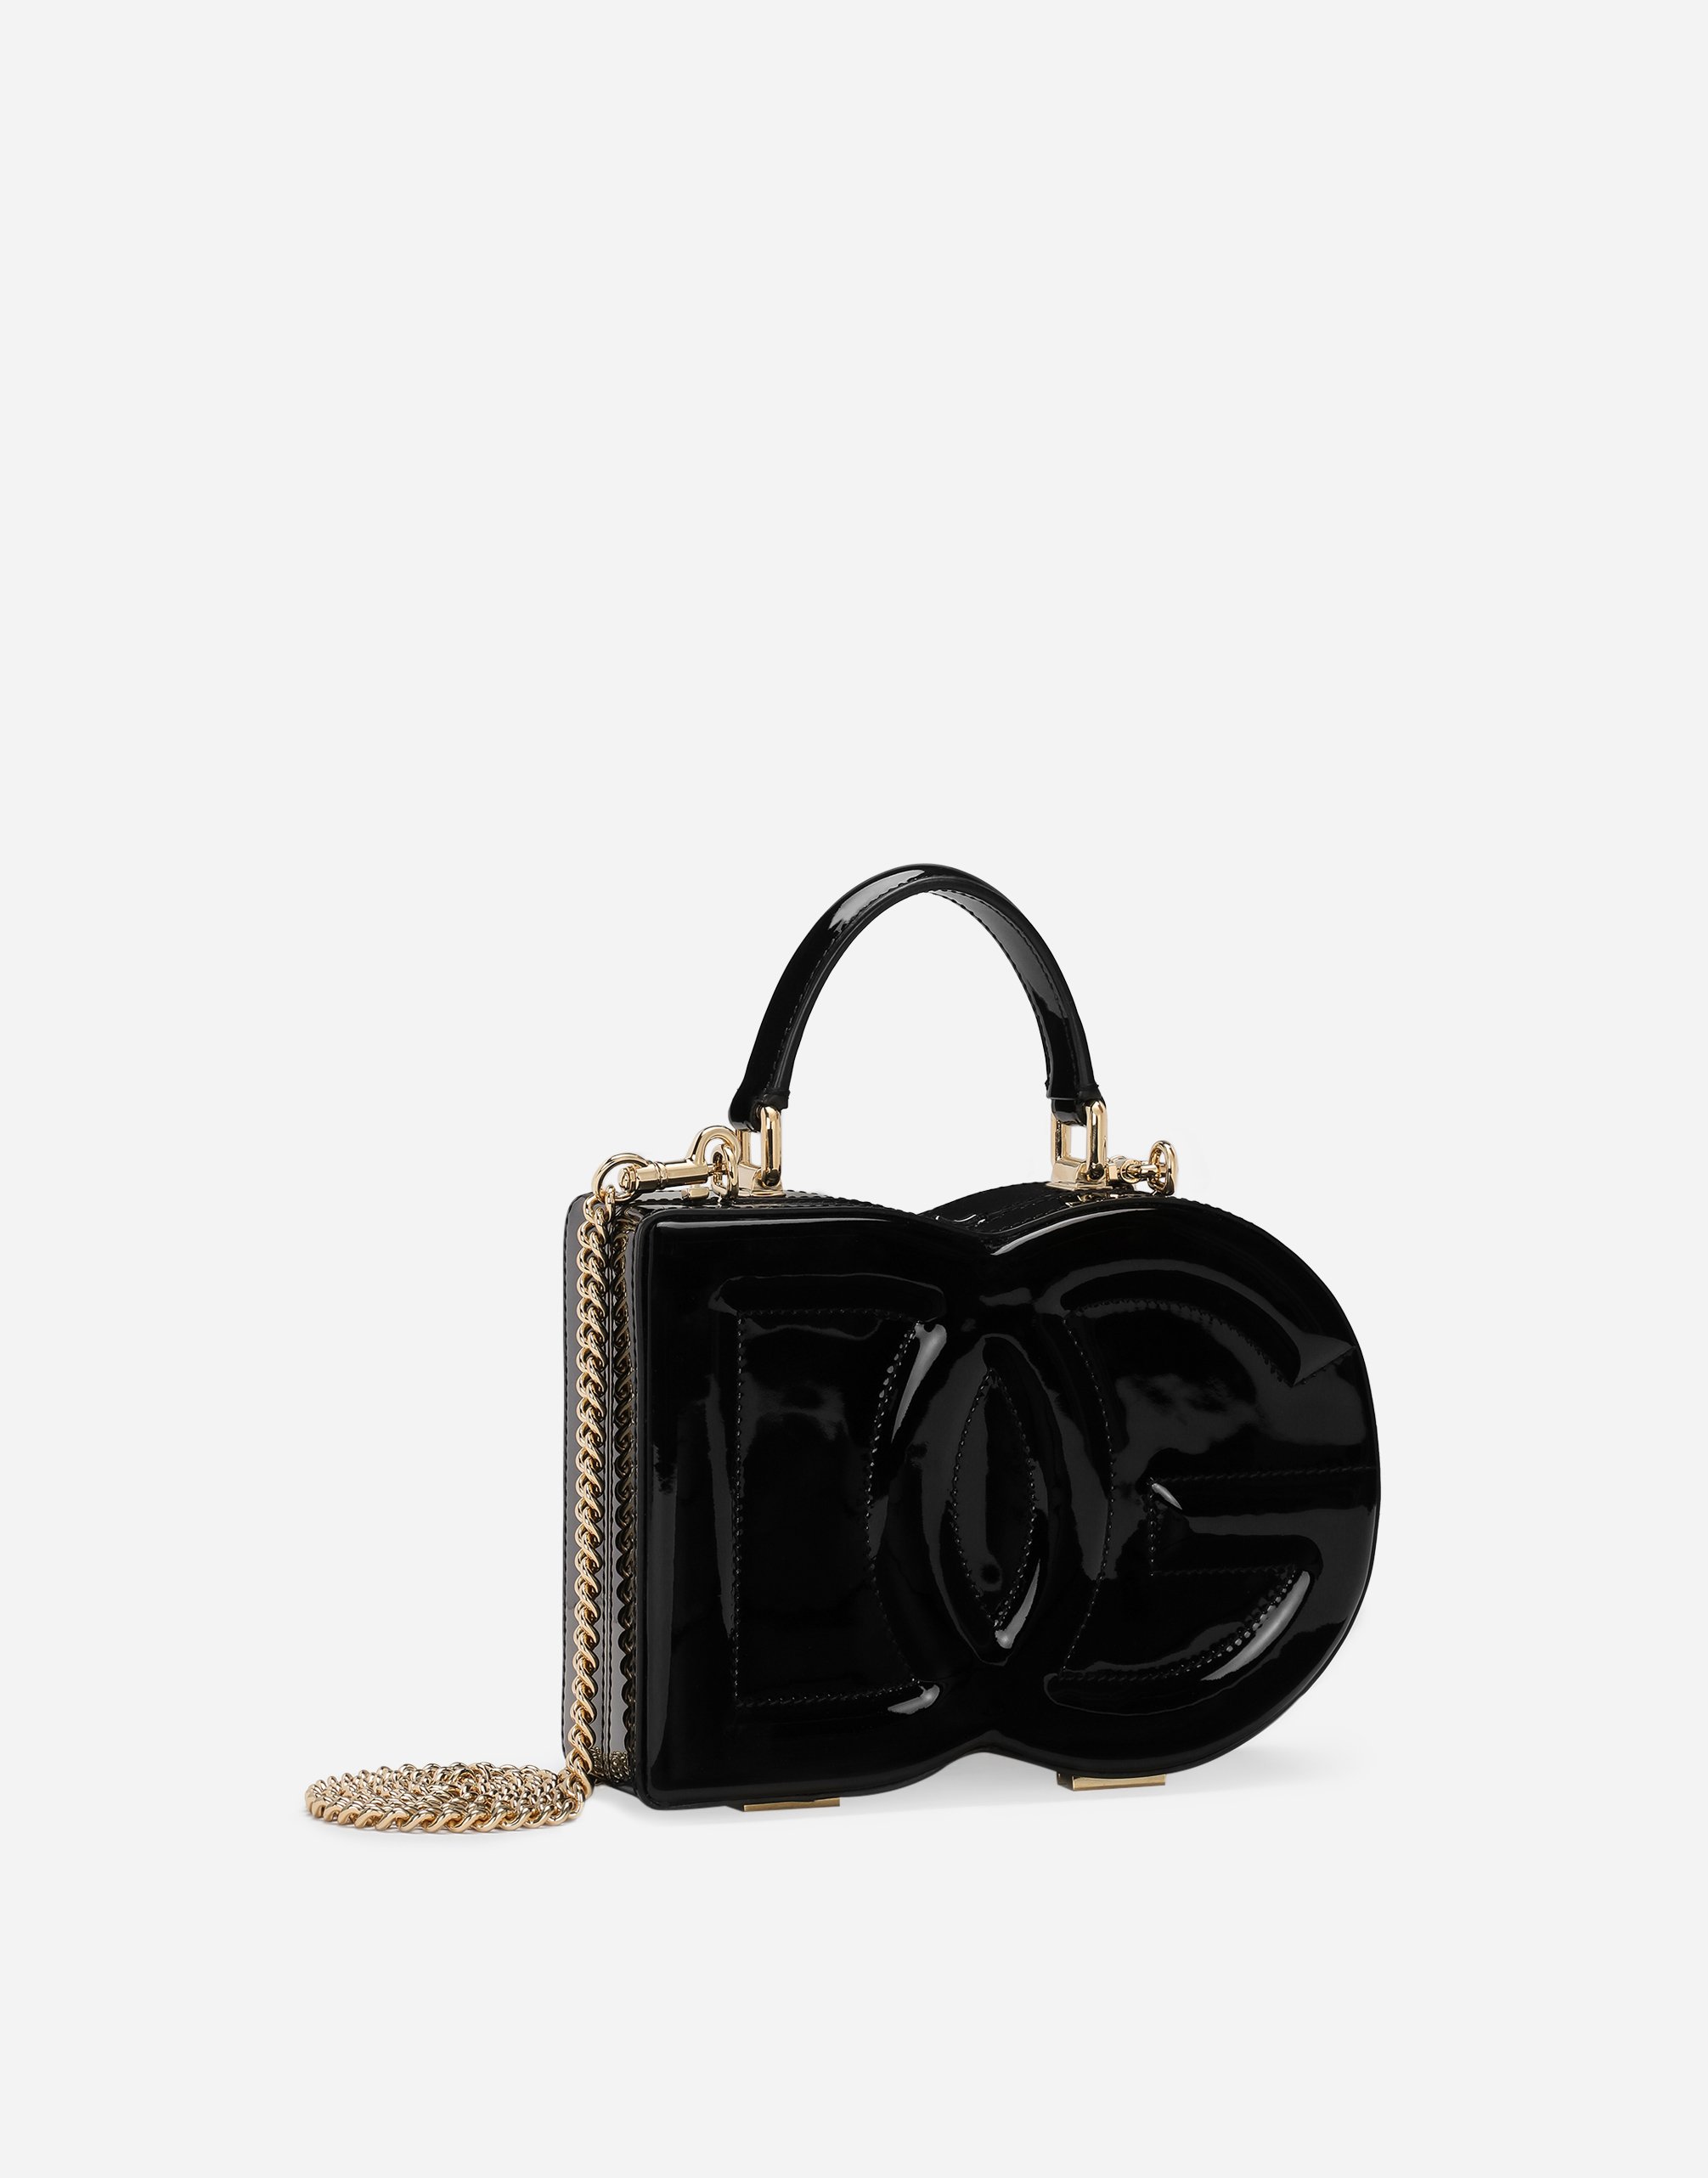 Chanel Mini Square Small Chain Shoulder Bag Crossbody Black Quilt H15